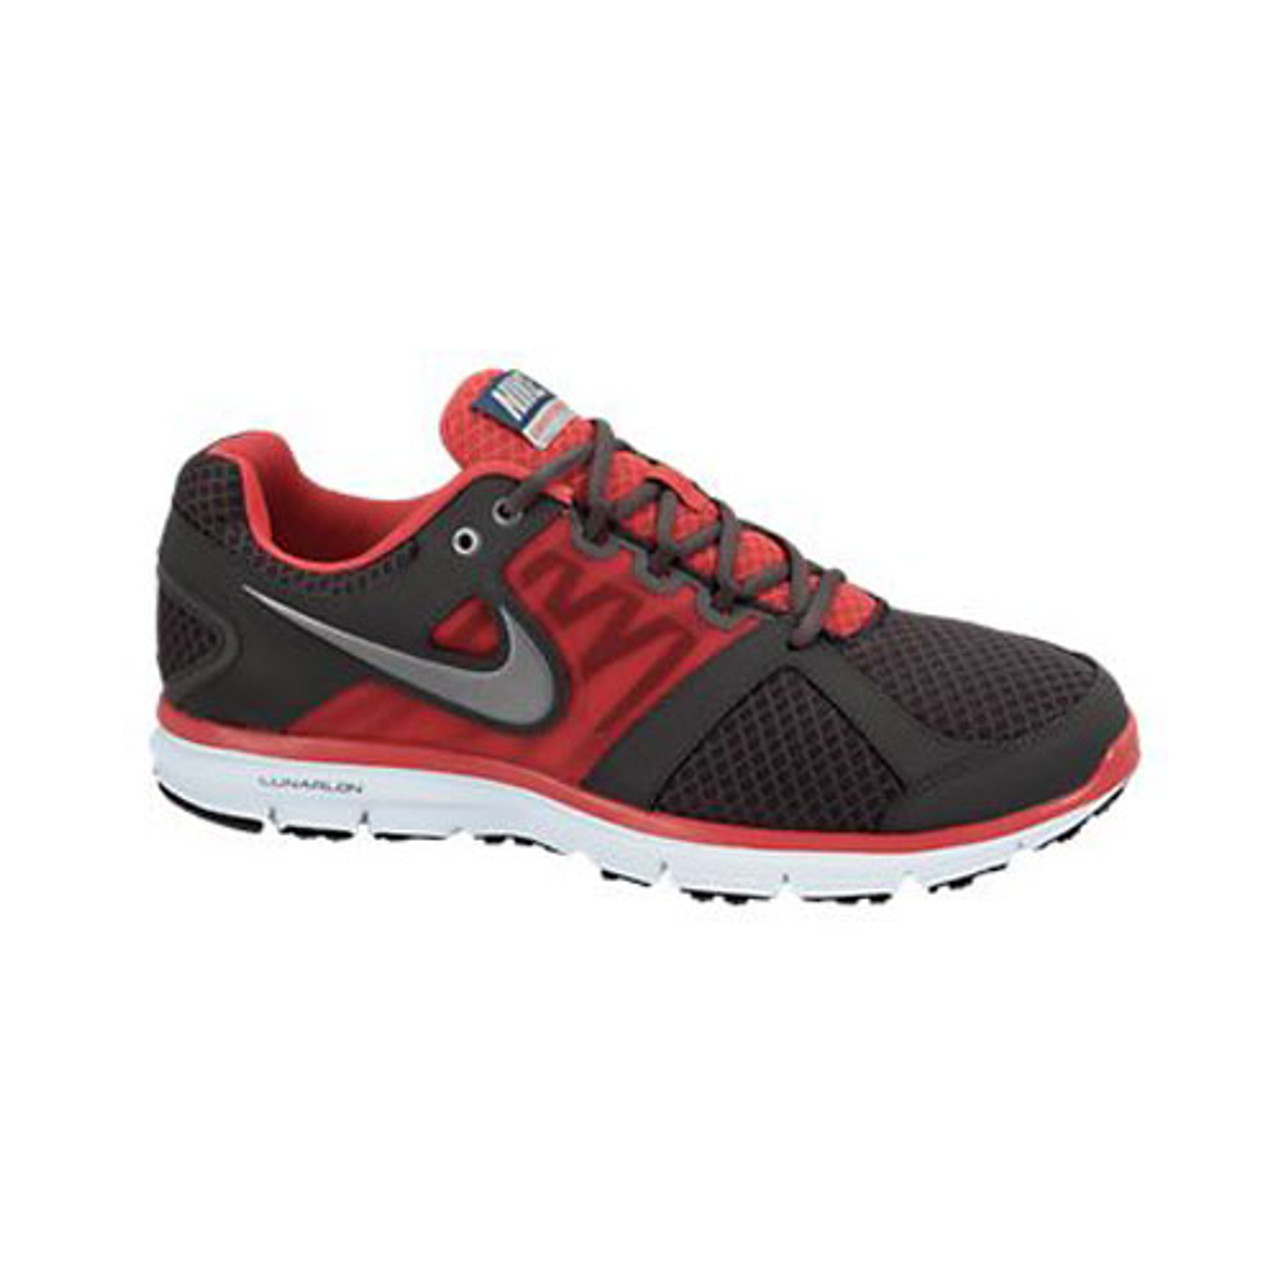 Nike Lunar 2 Fog/Pimento Mens Running Shoes - | Nike Athletic & More - Shoolu.com | Shoolu.com